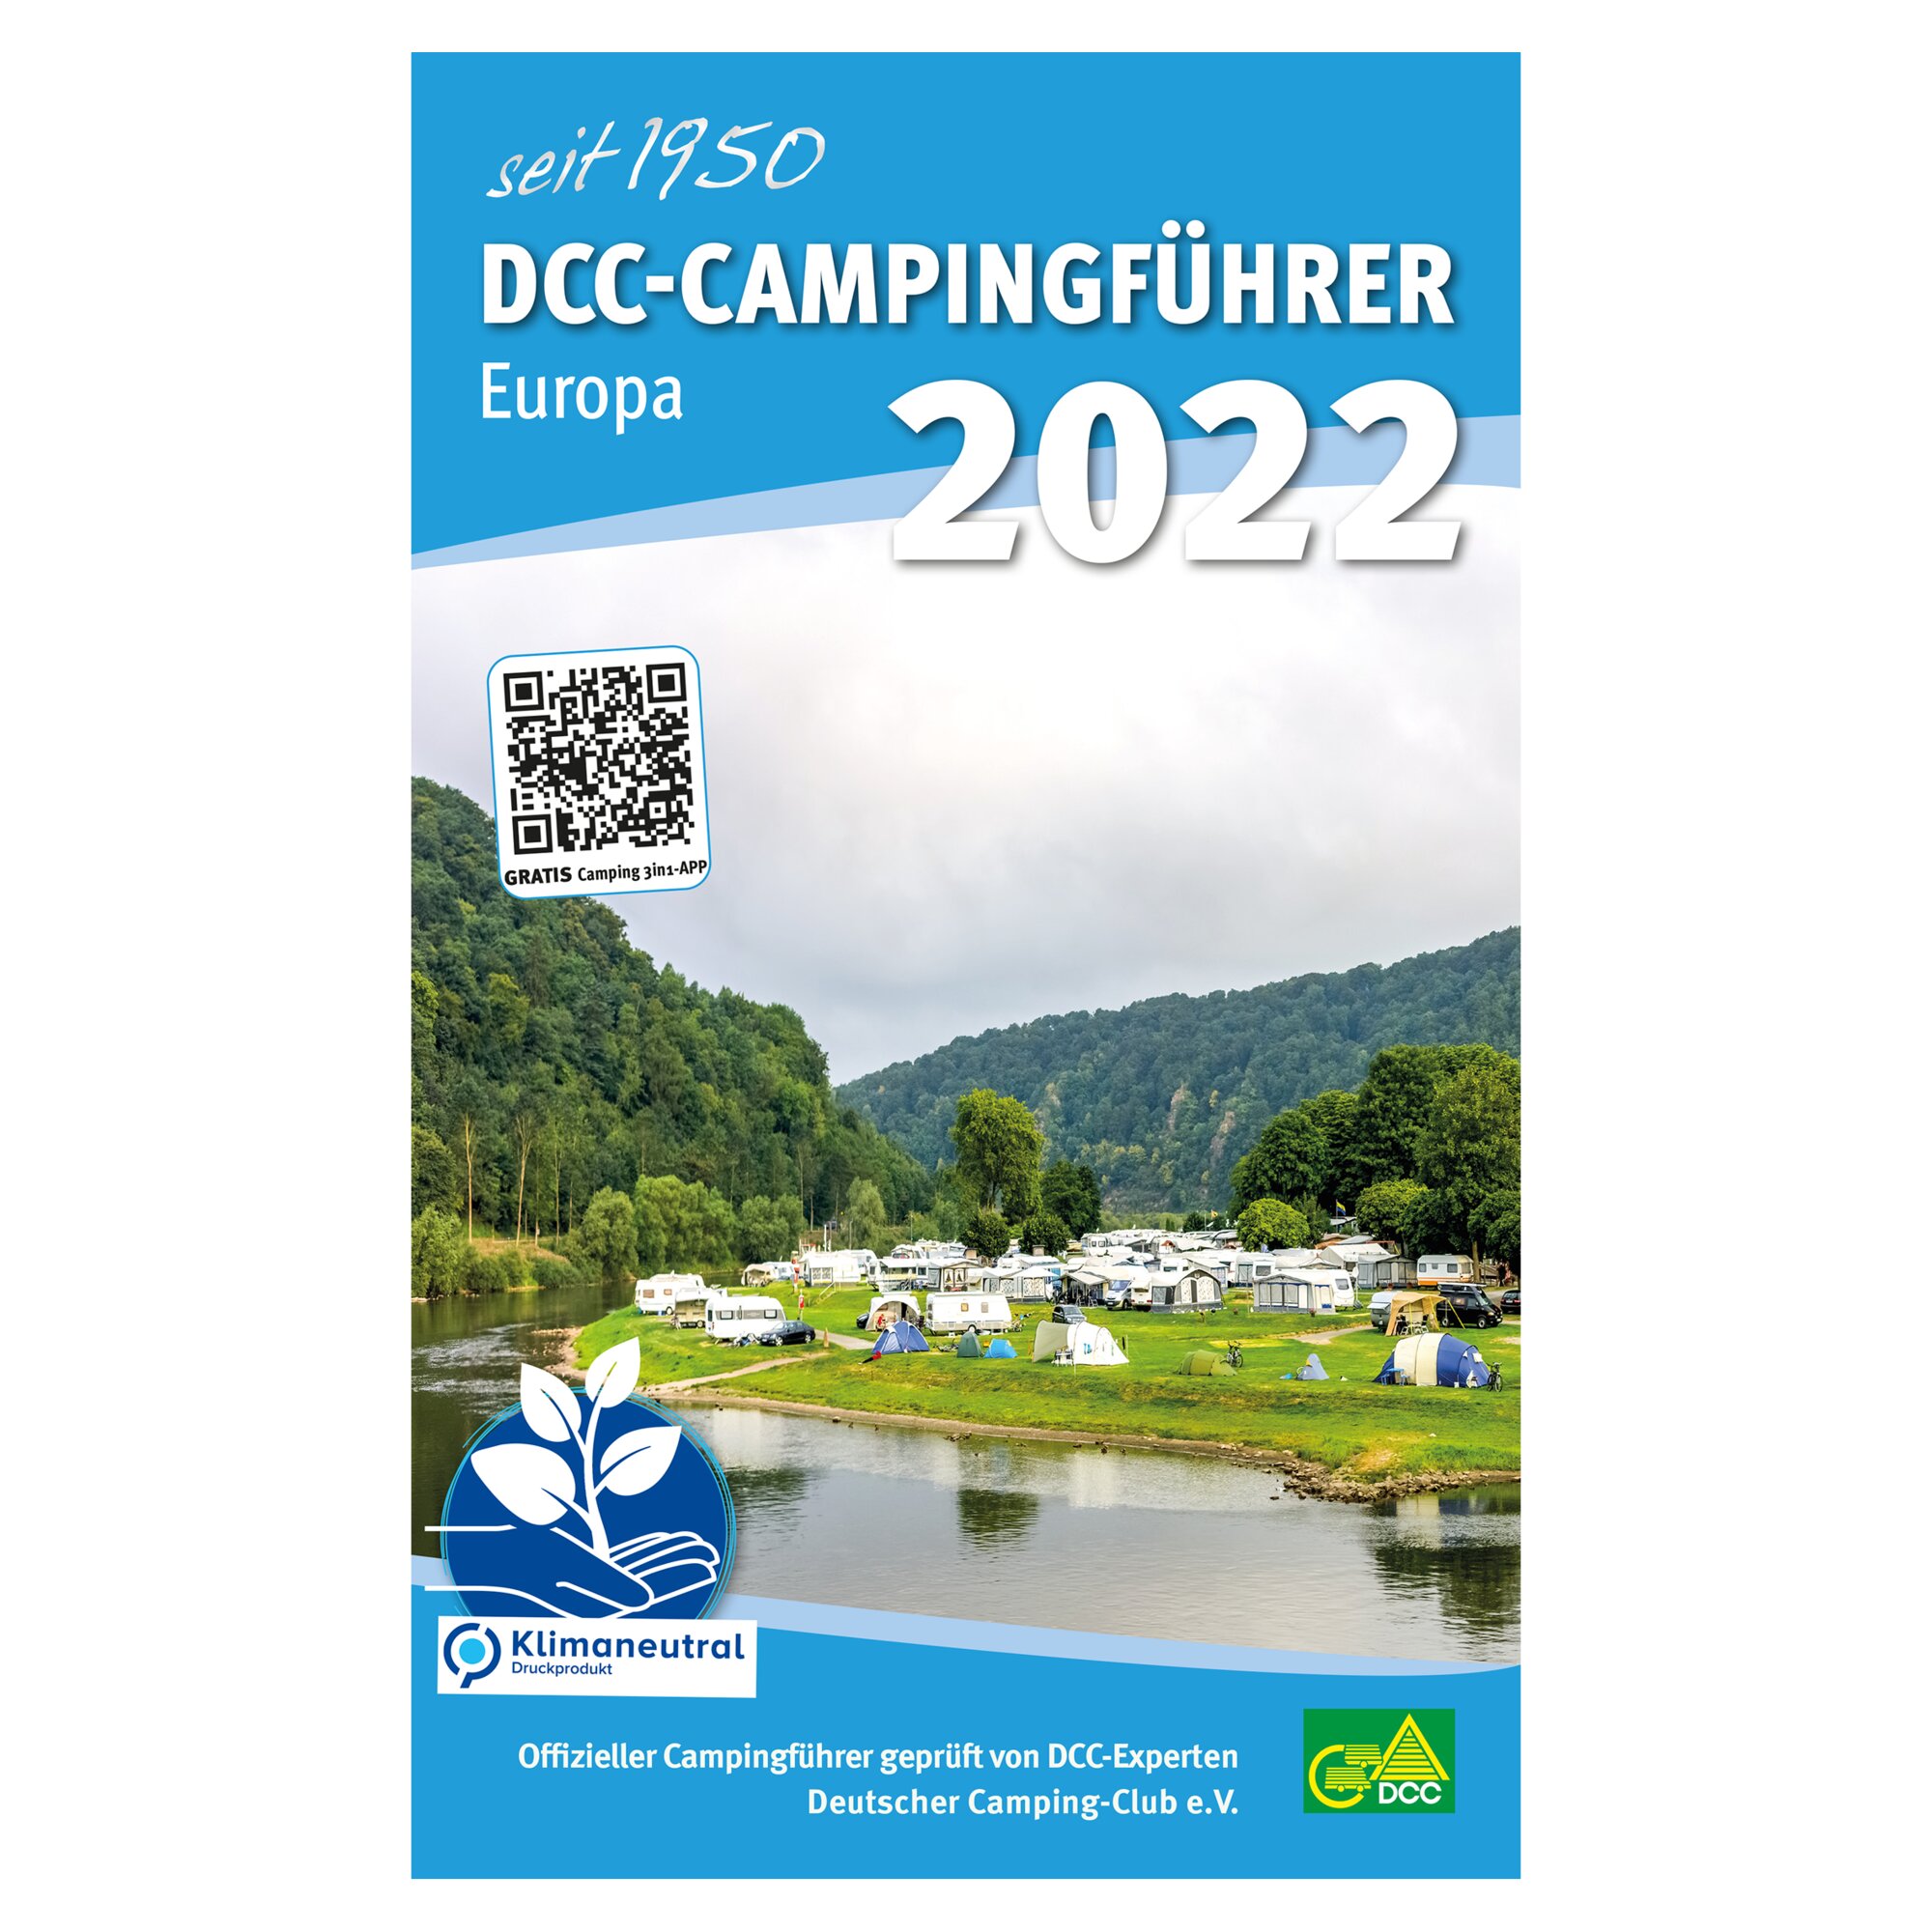 DCC-Campingführer Europa